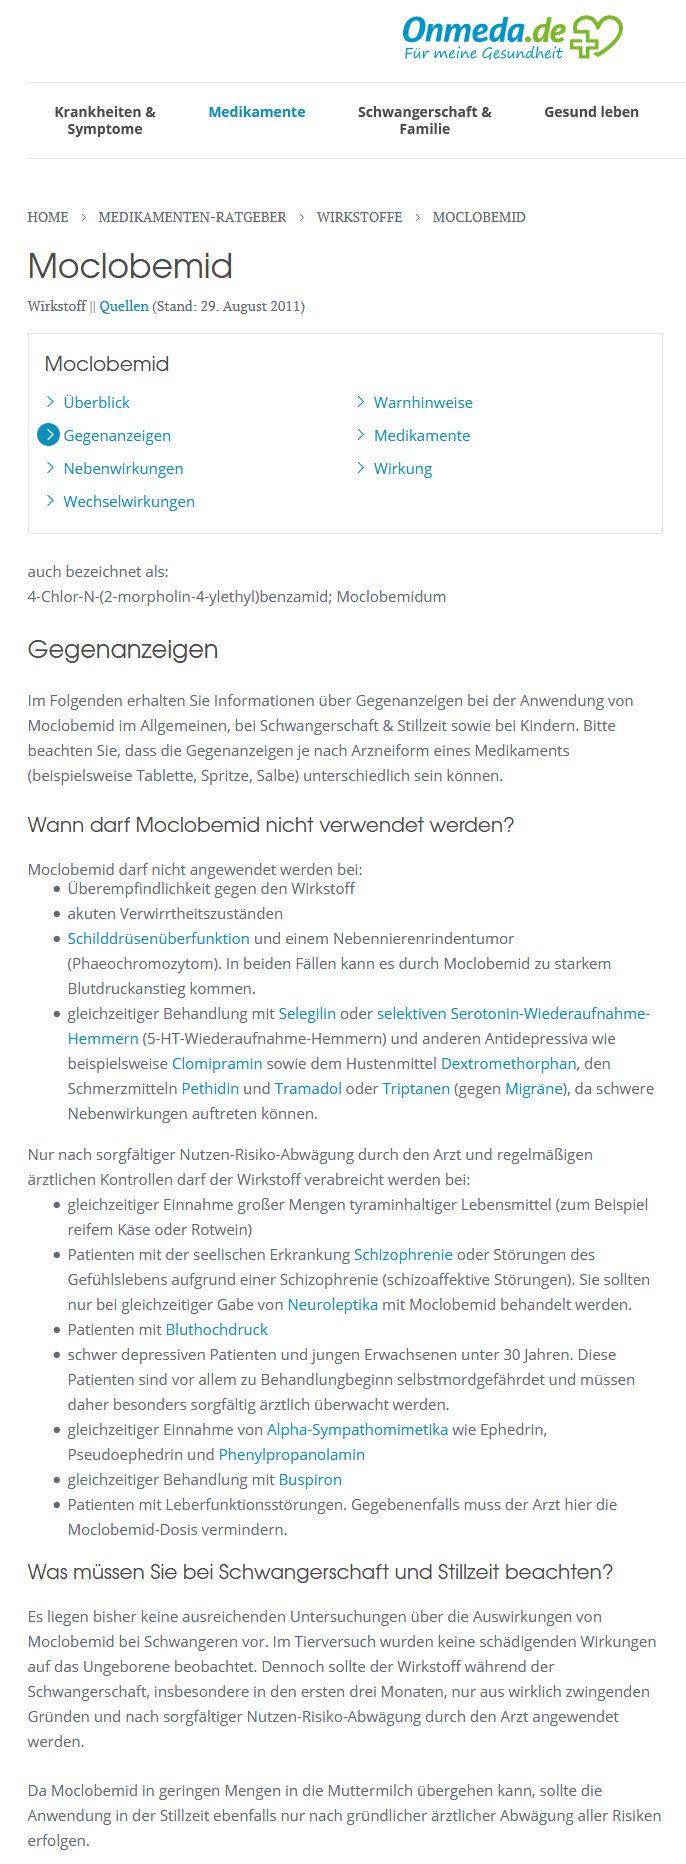 Infos zu Moclobemid Gegenanzeigen / Kontraindikationen bei onmeda.de